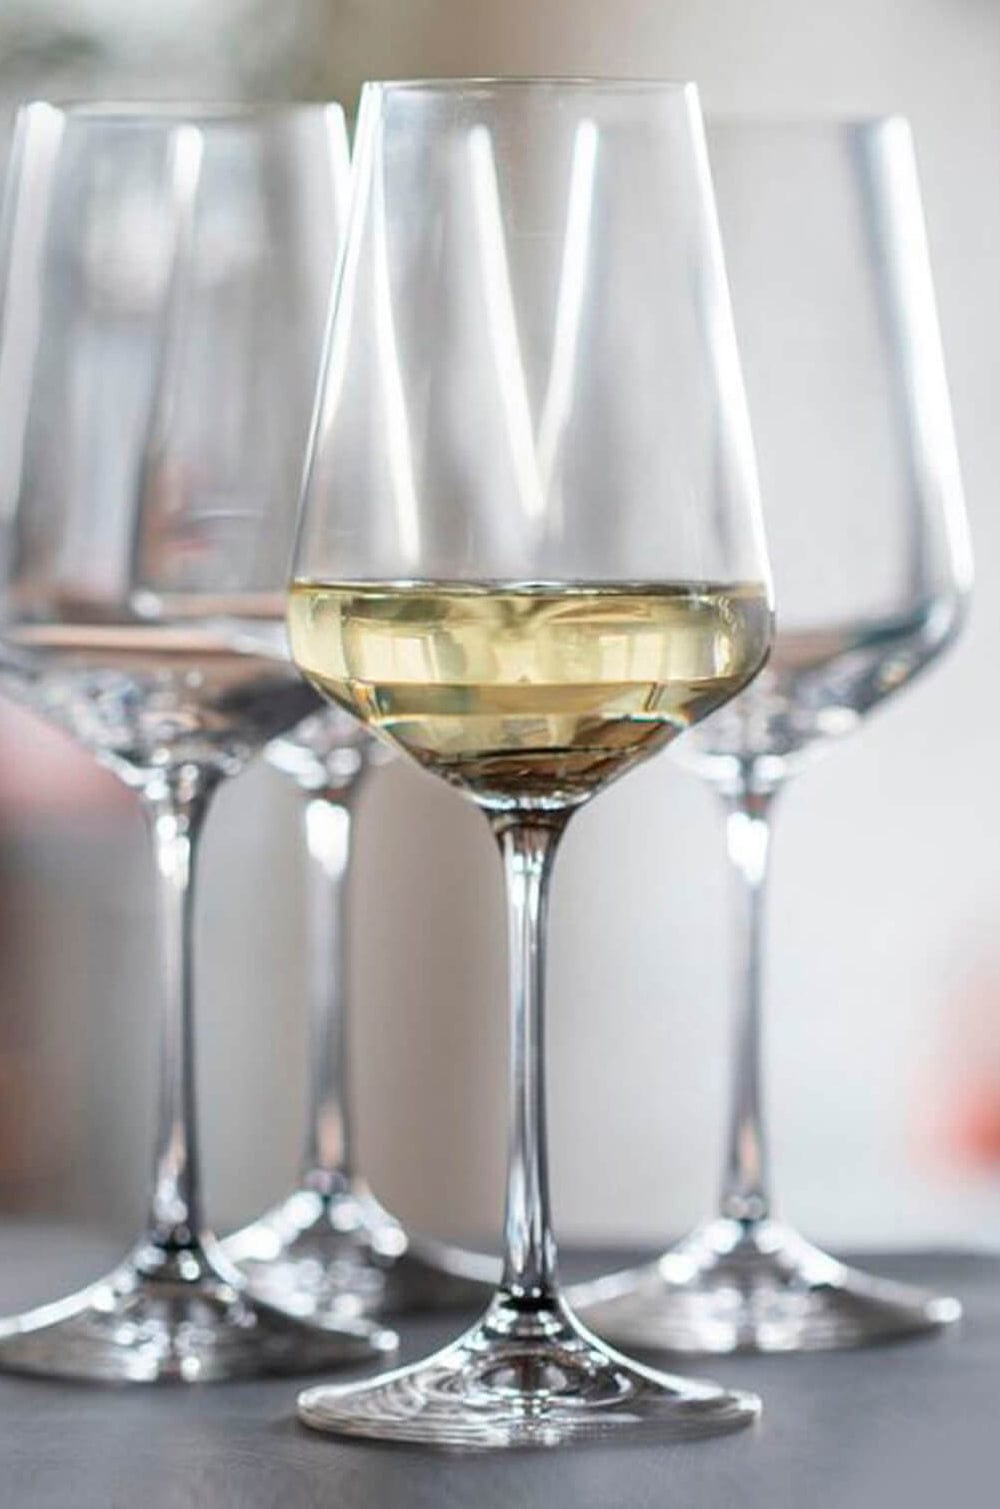 Dartington Crystal Cheers White Wine Glass- Set of 4